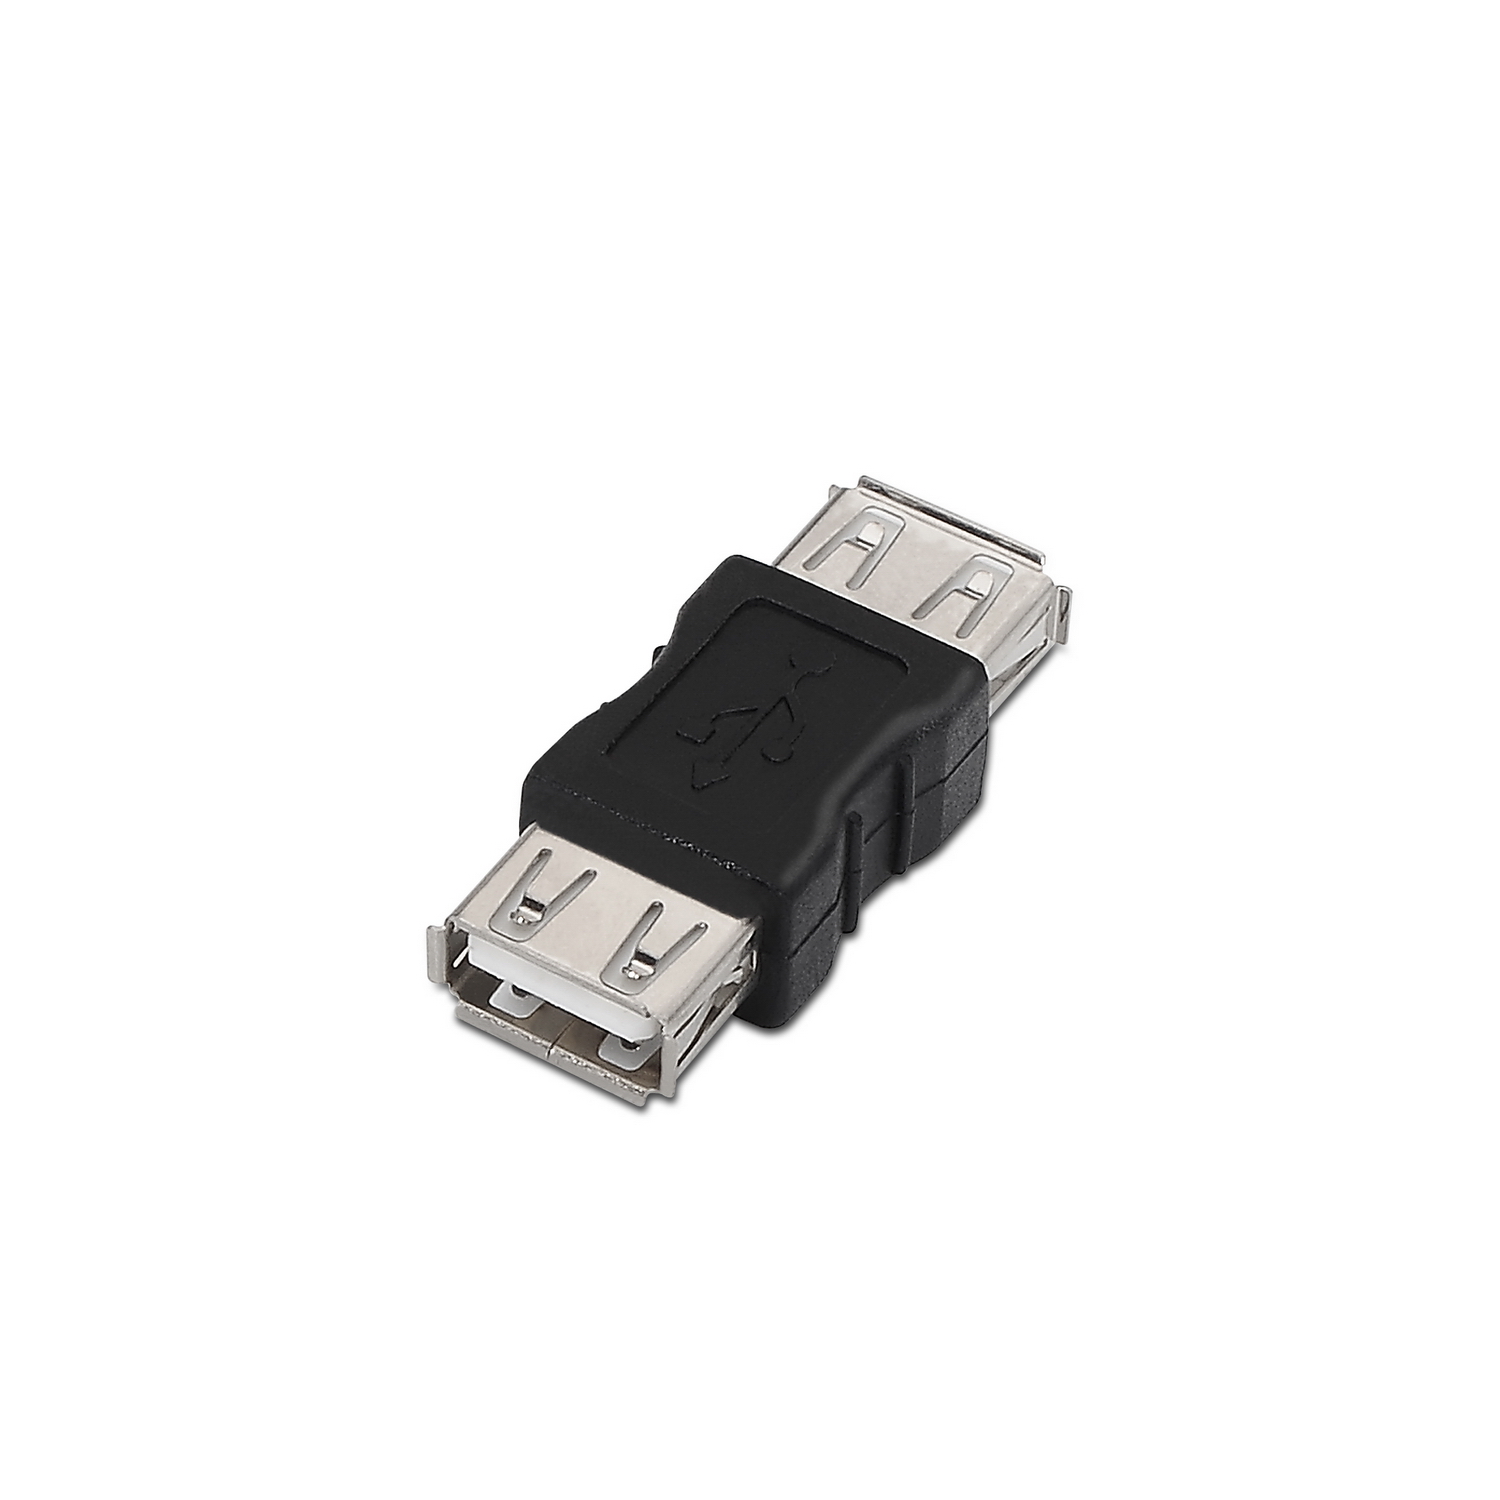 Aisens Adaptador USB 2.0 - Tipo A Hembra-A Hembra para Unir Dos Cables de USB - Color Negro